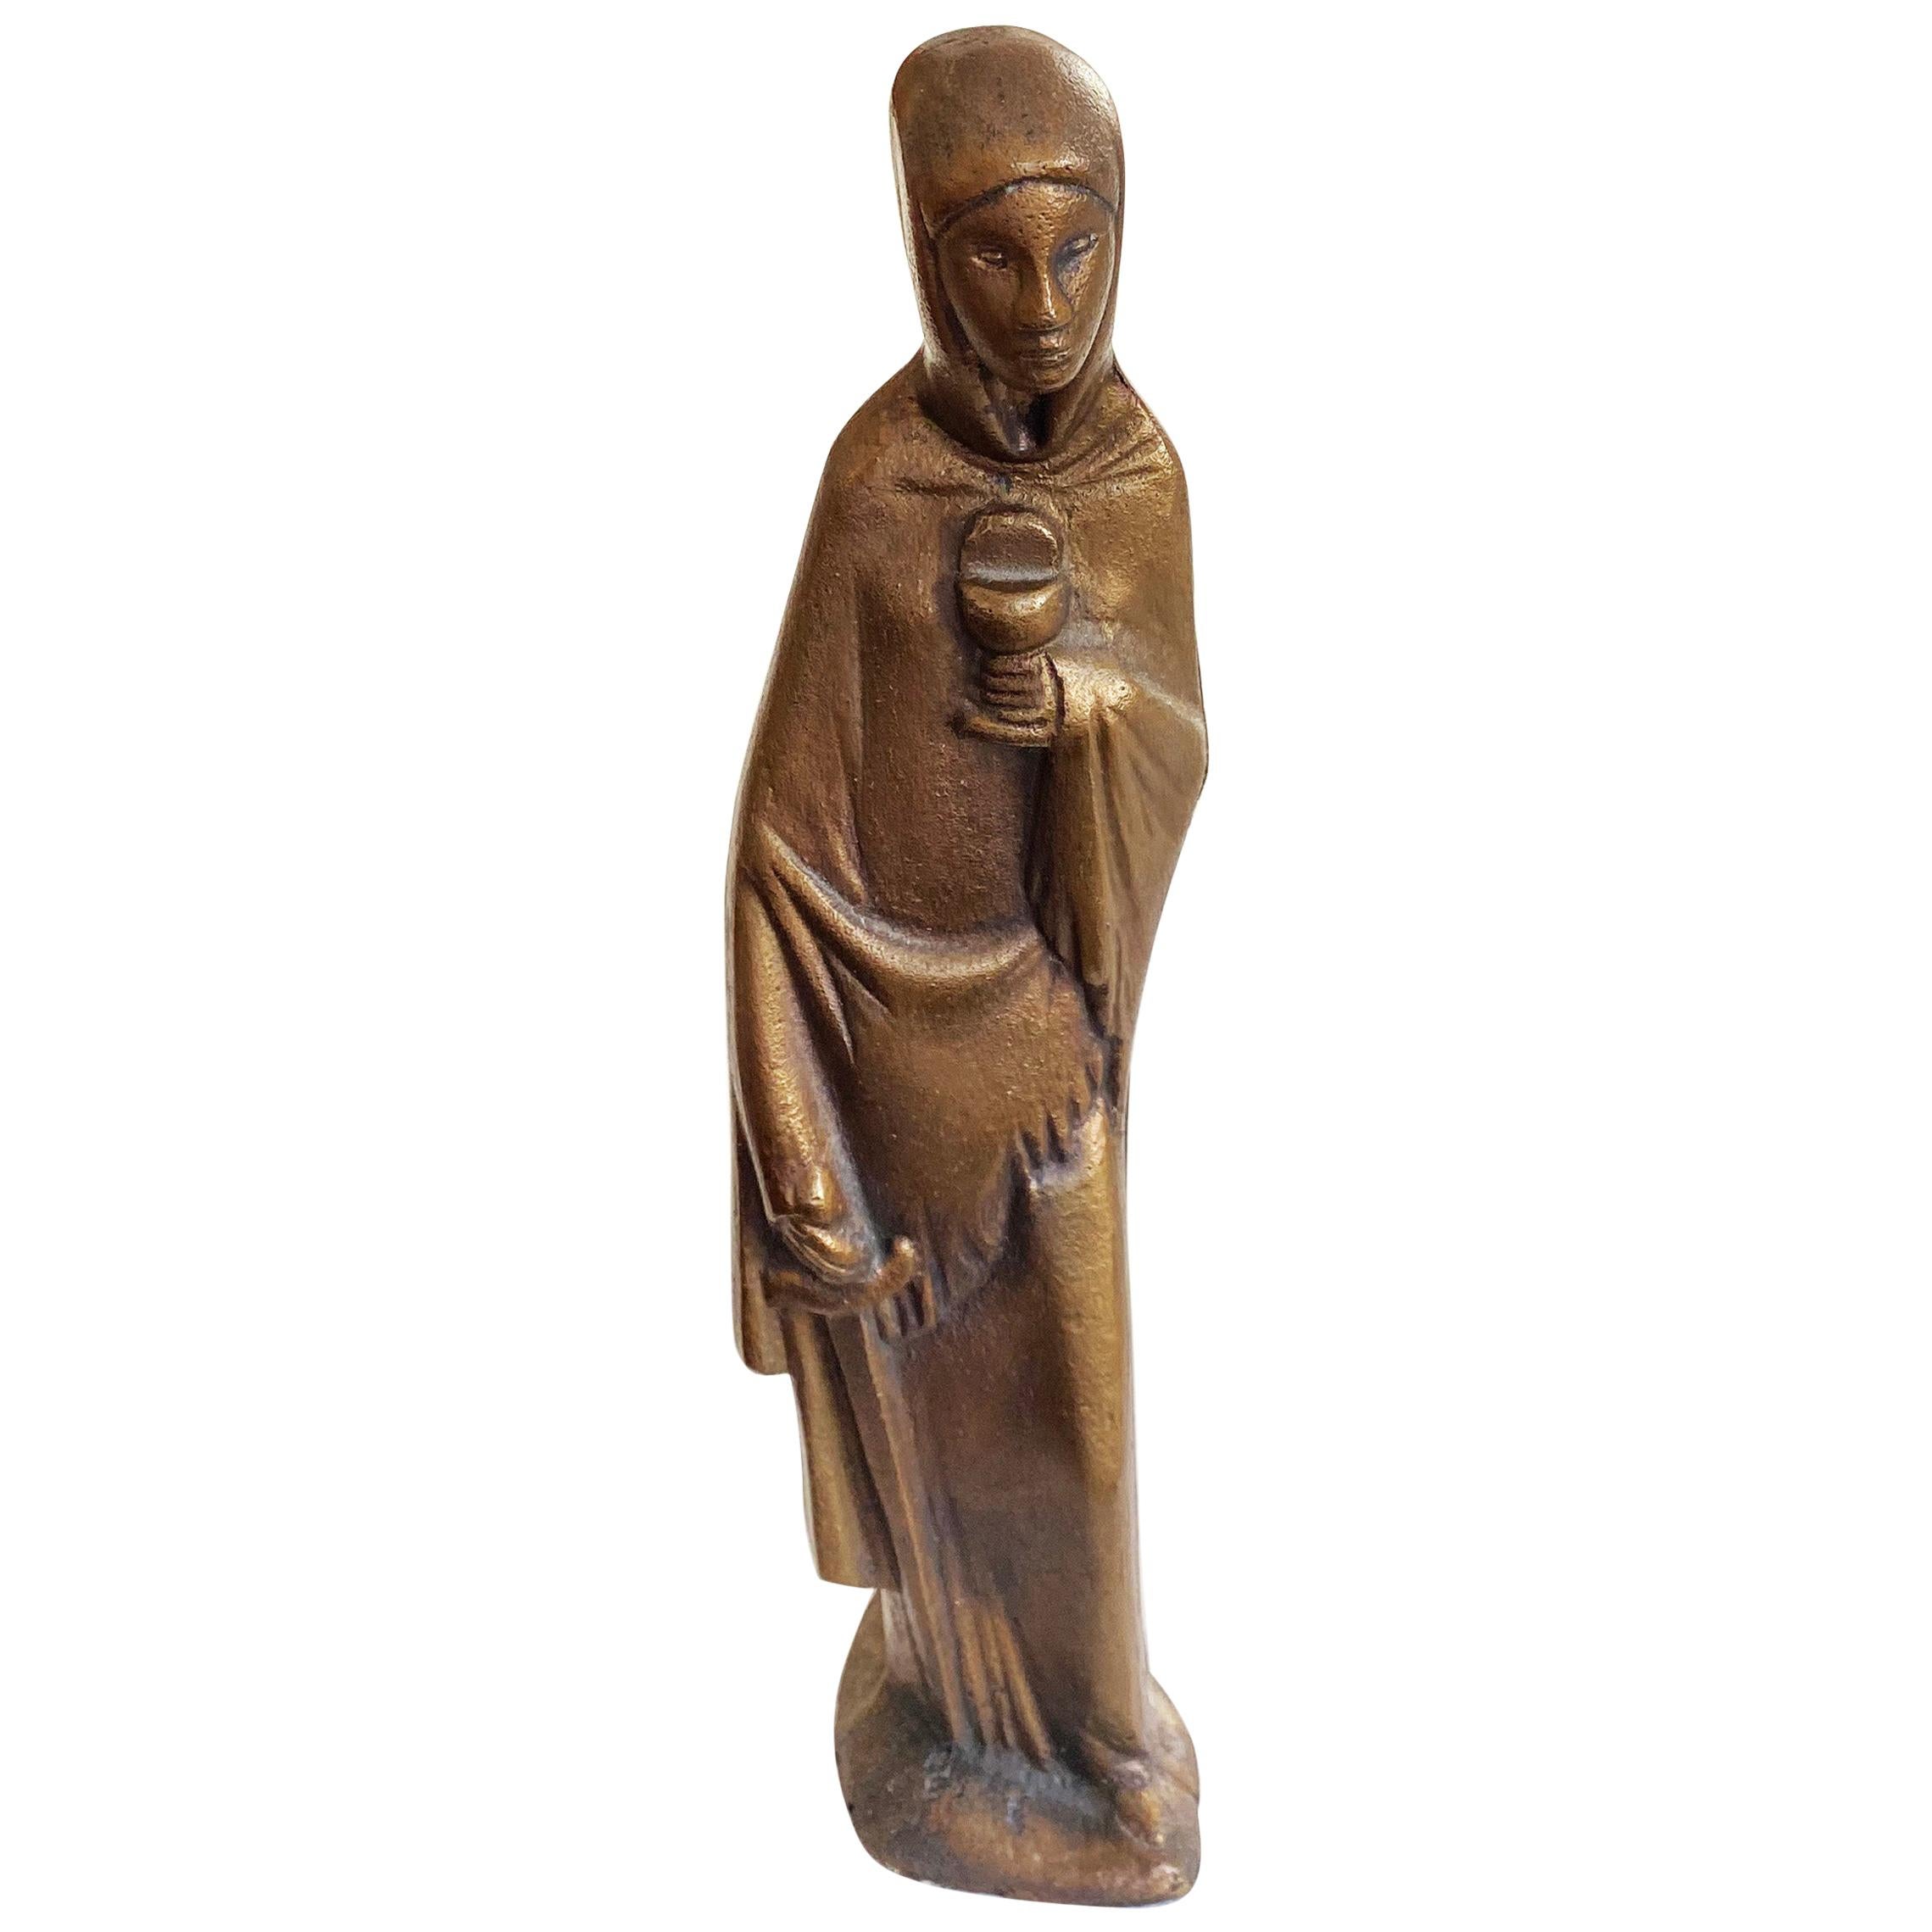 Holy Barbara en bronze du milieu du siècle dernier